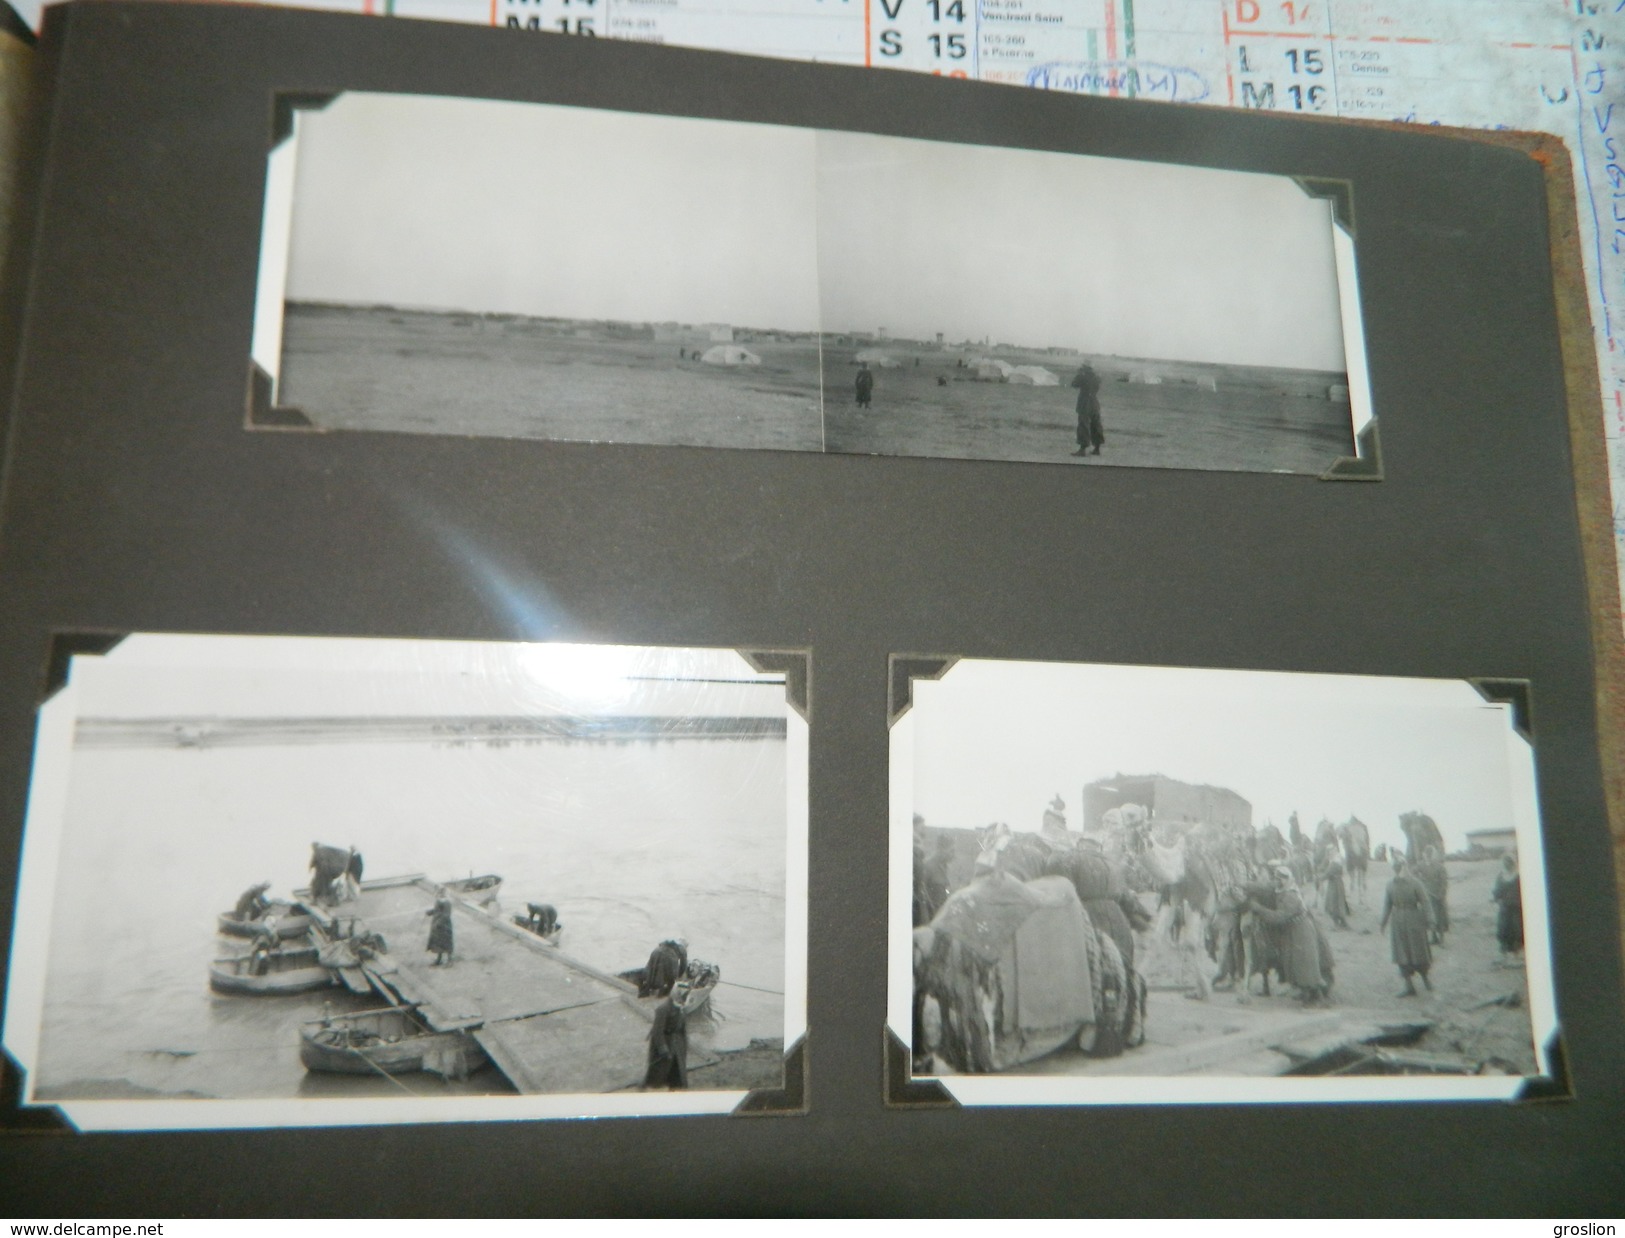 204 PHOTOS MILITAIRES FRANCAIS EN SYRIE1920 A 1940 ARMEE DU LEVANT.+ CORRESPONDANCES. 204 PHOTOS OF FRENCH ARMY SYRIA